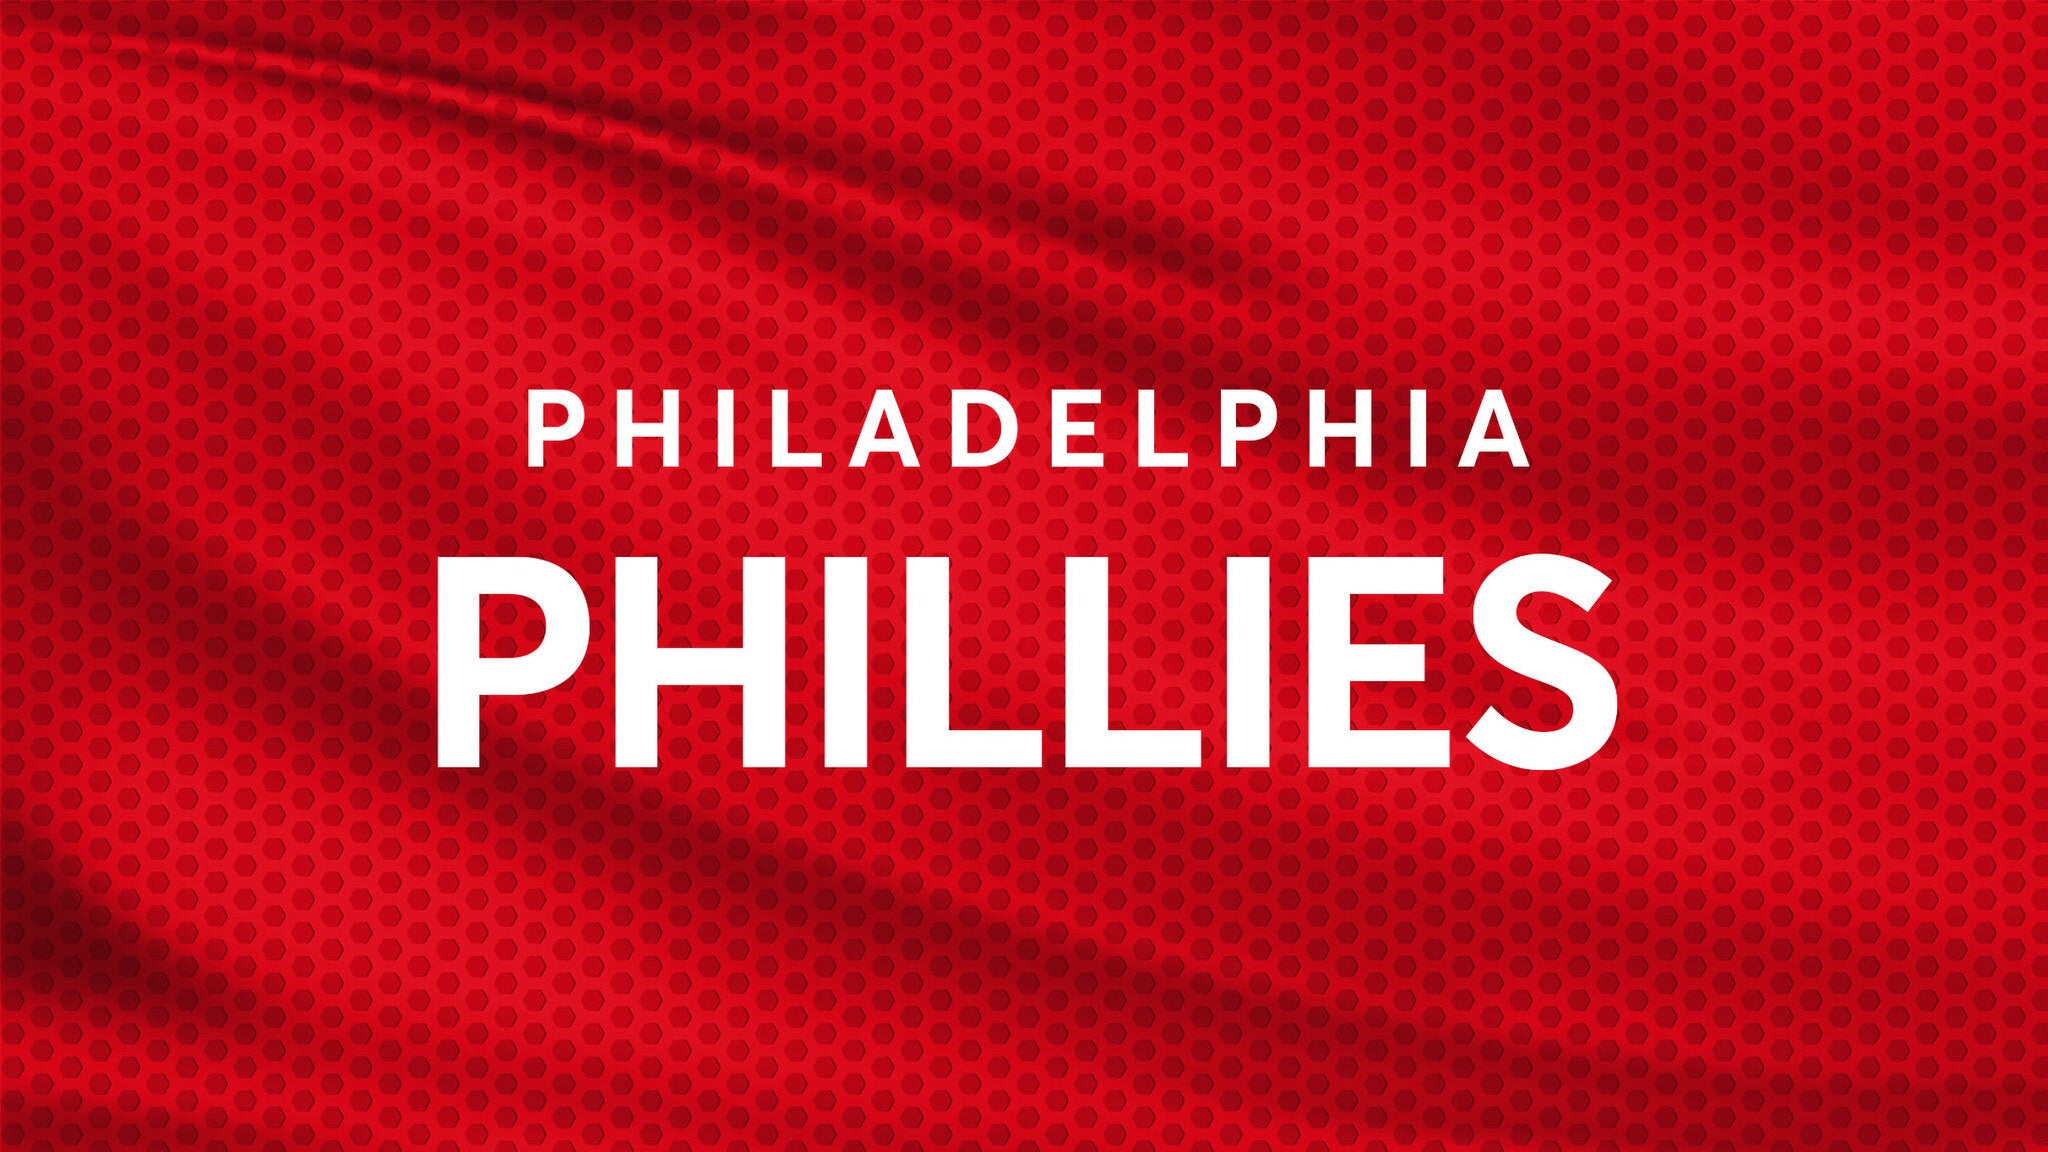 Philadelphia Phillies vs. Cincinnati Reds